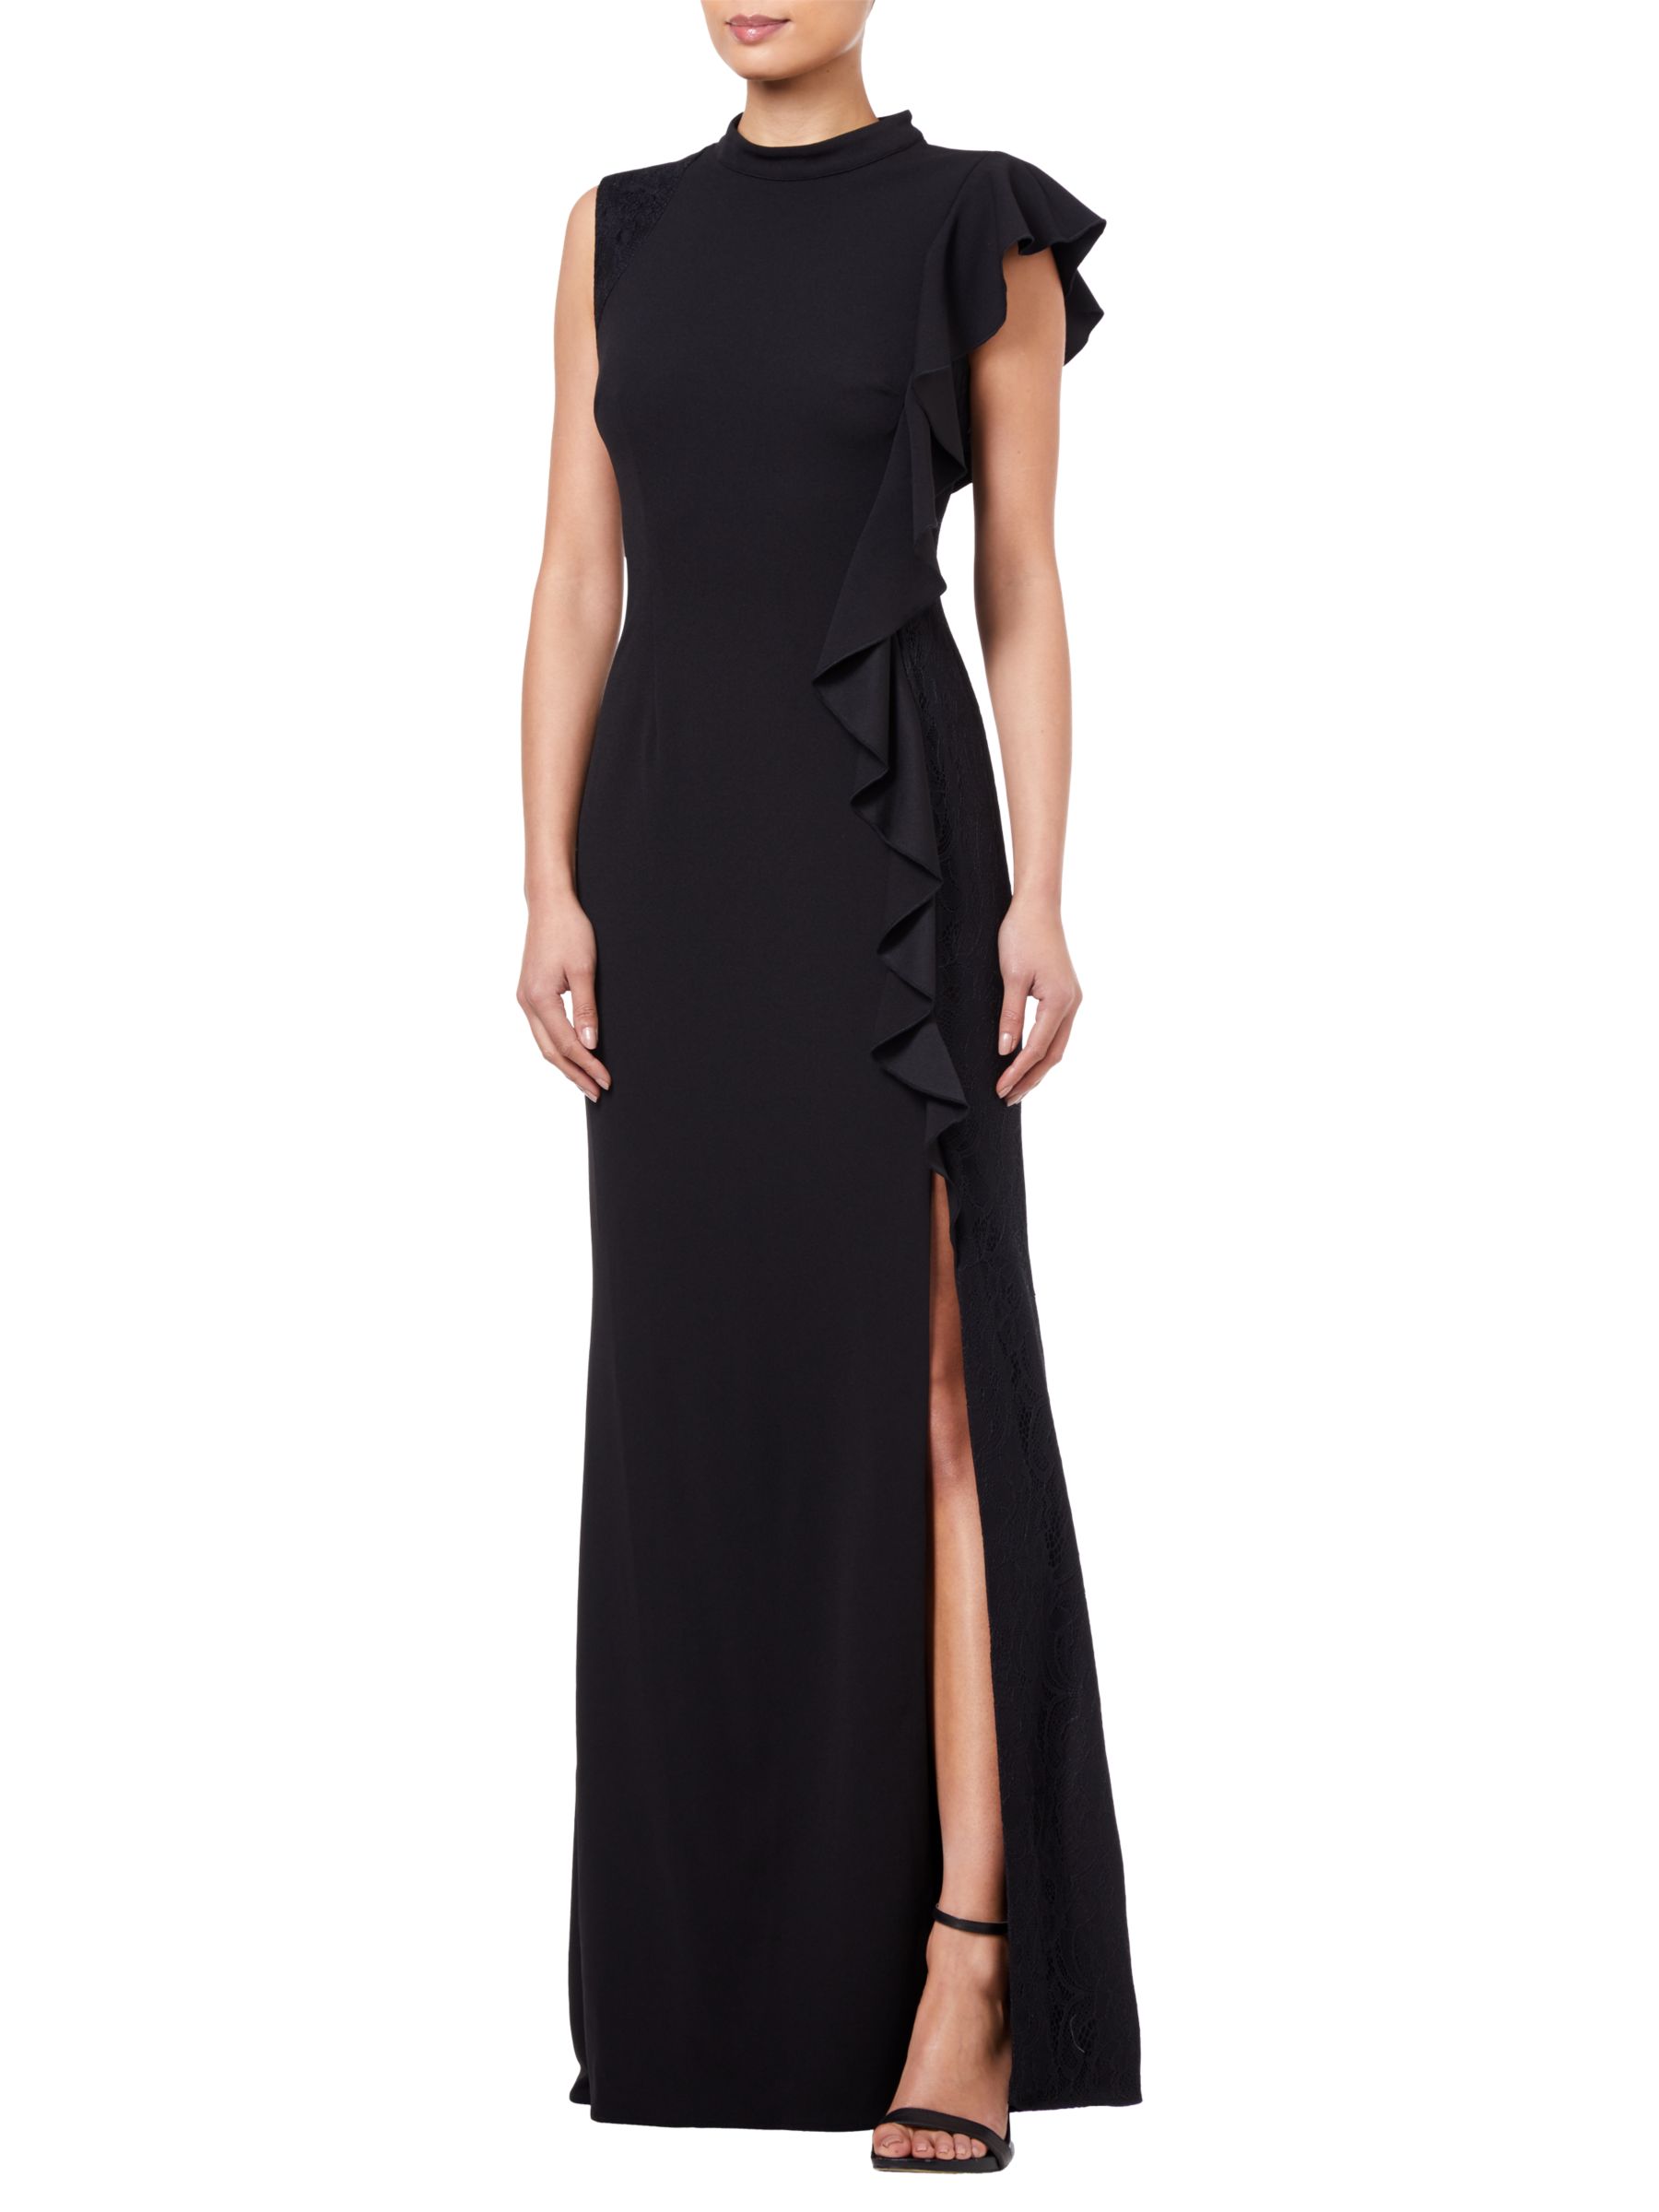 Adrianna Papell Petite Knit Crepe Dress, Black